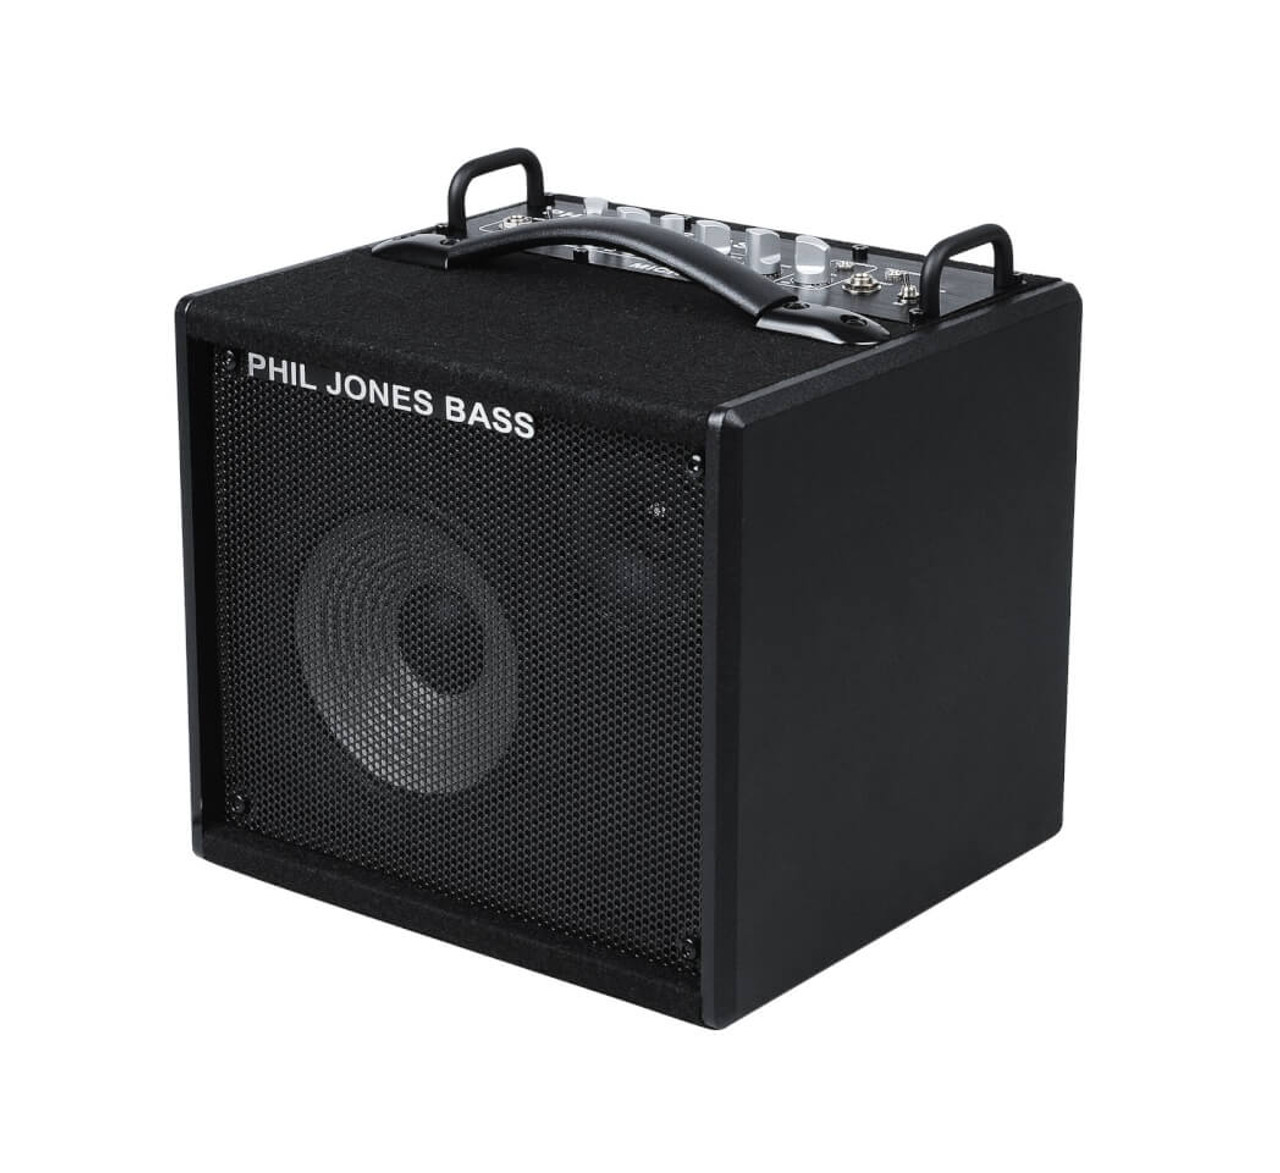 PJBMicro7 Bass Amp PHIL JONES BASS